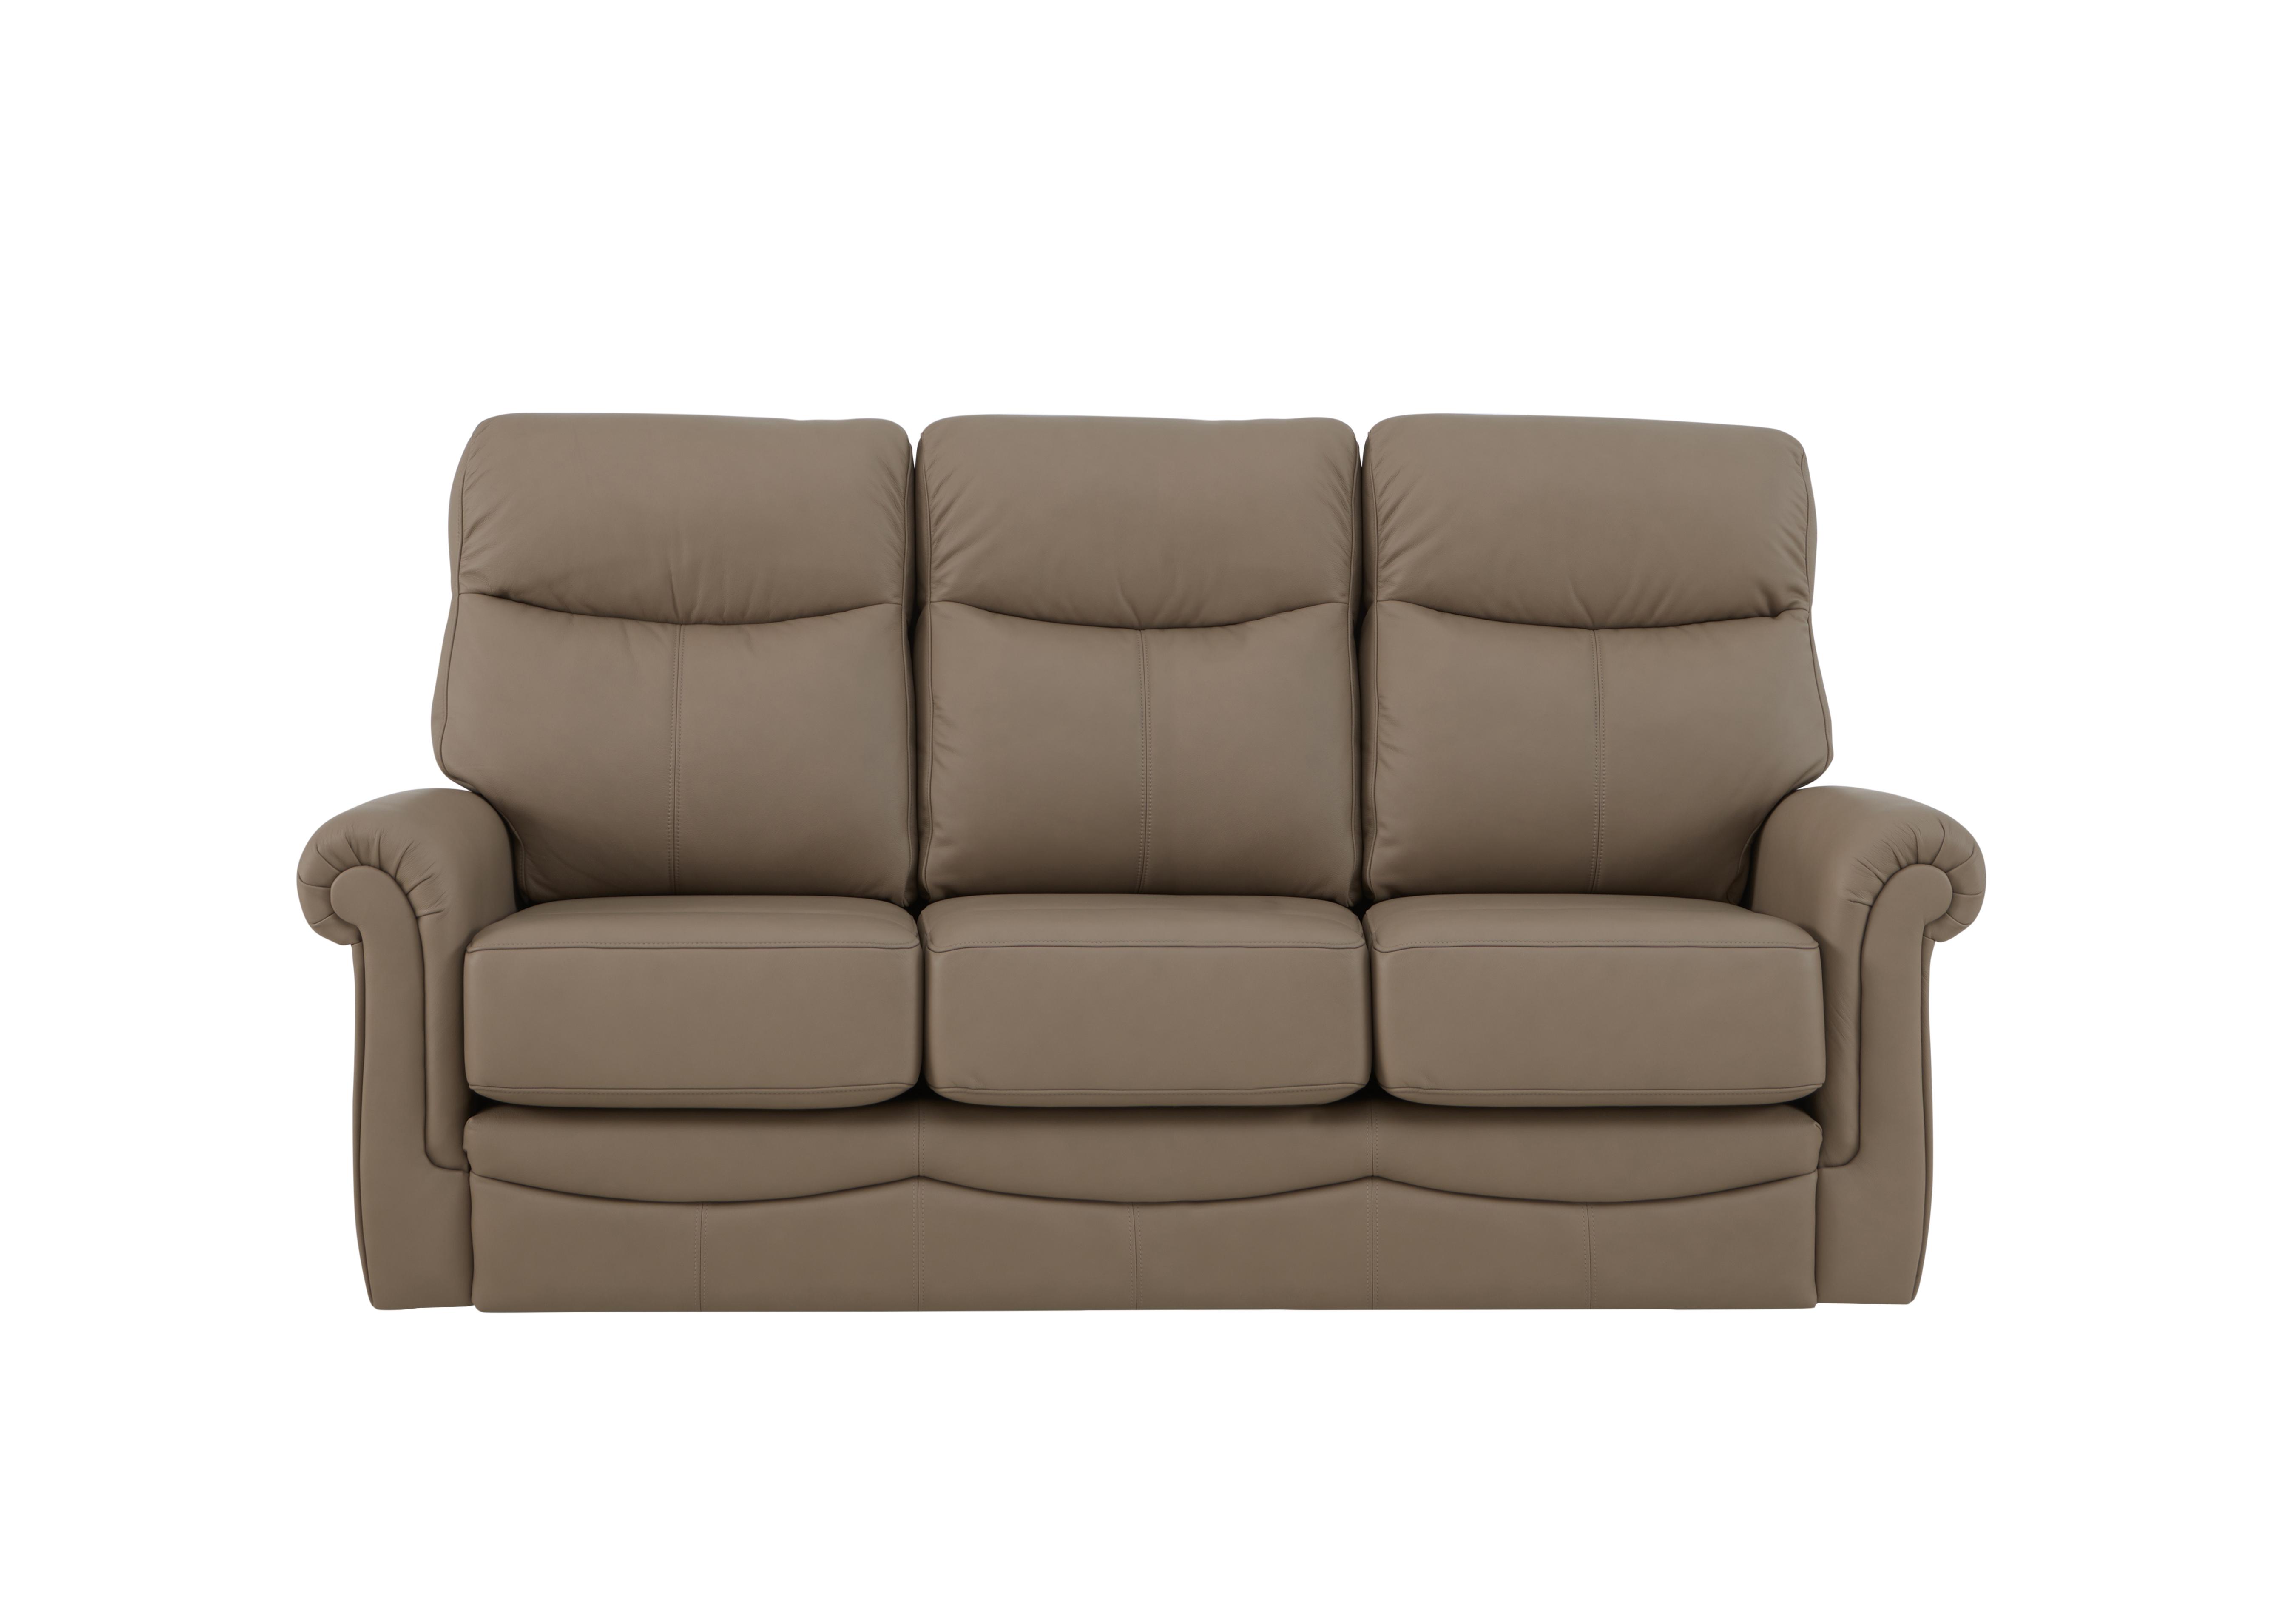 Avon Small 3 Seater Leather Sofa in L846 Cambridge Taupe on Furniture Village